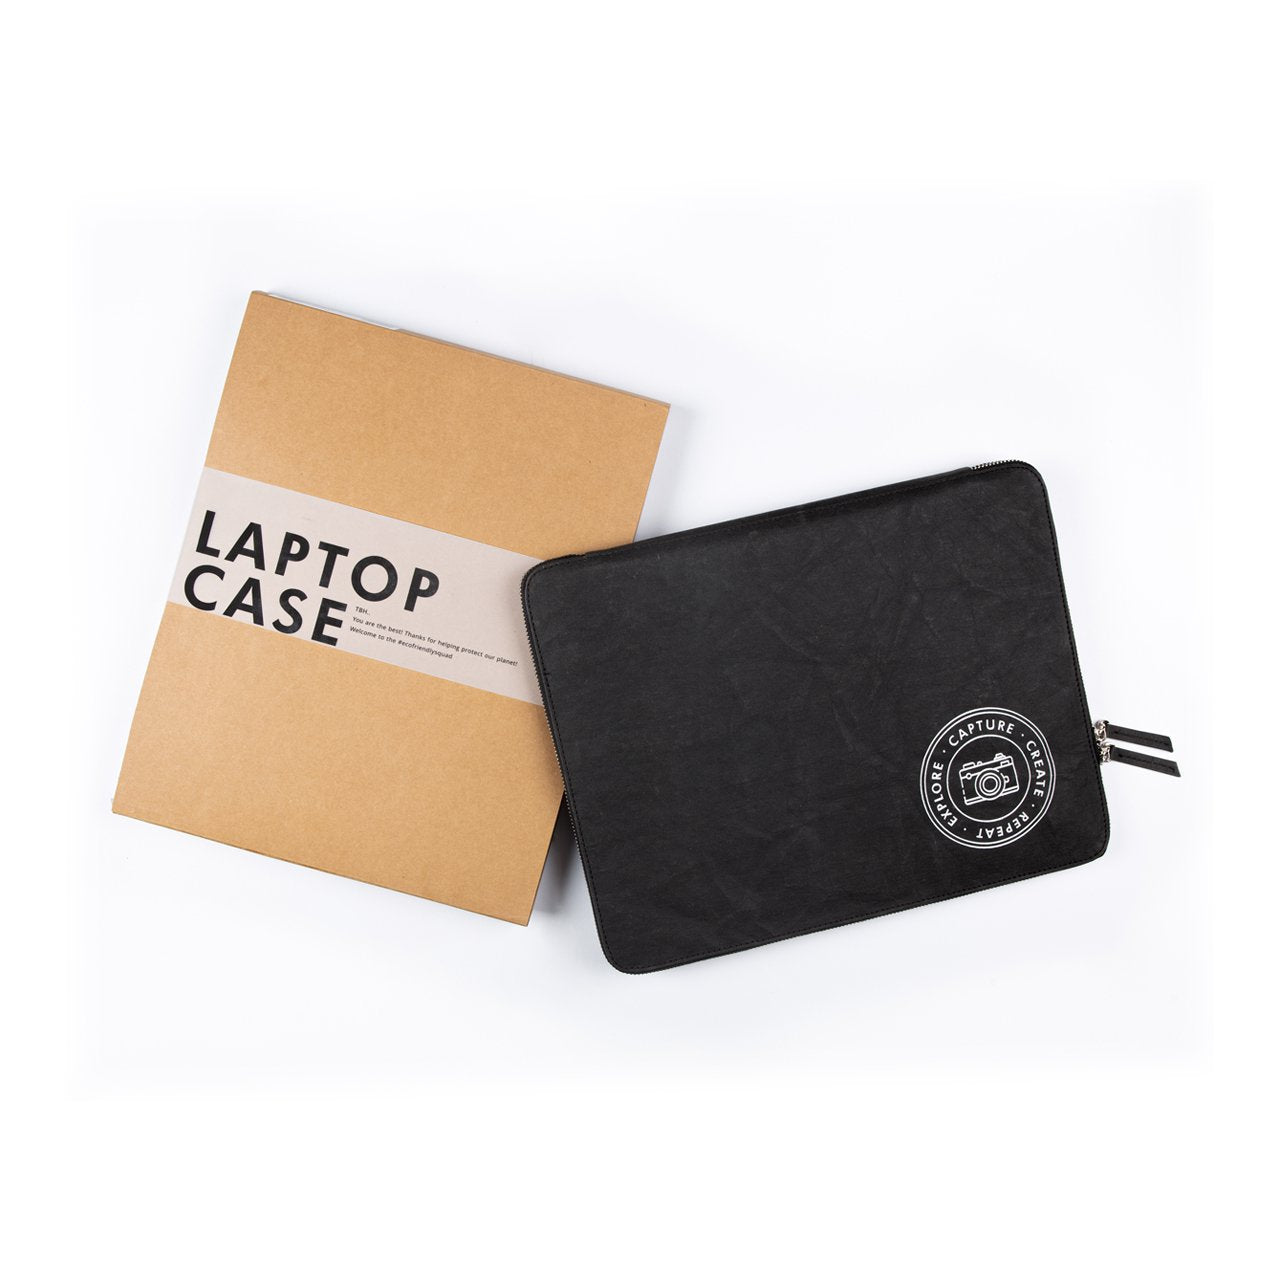 Laptop Sleeve: Capture (Black) - 7mm - Fine Paper Stationery